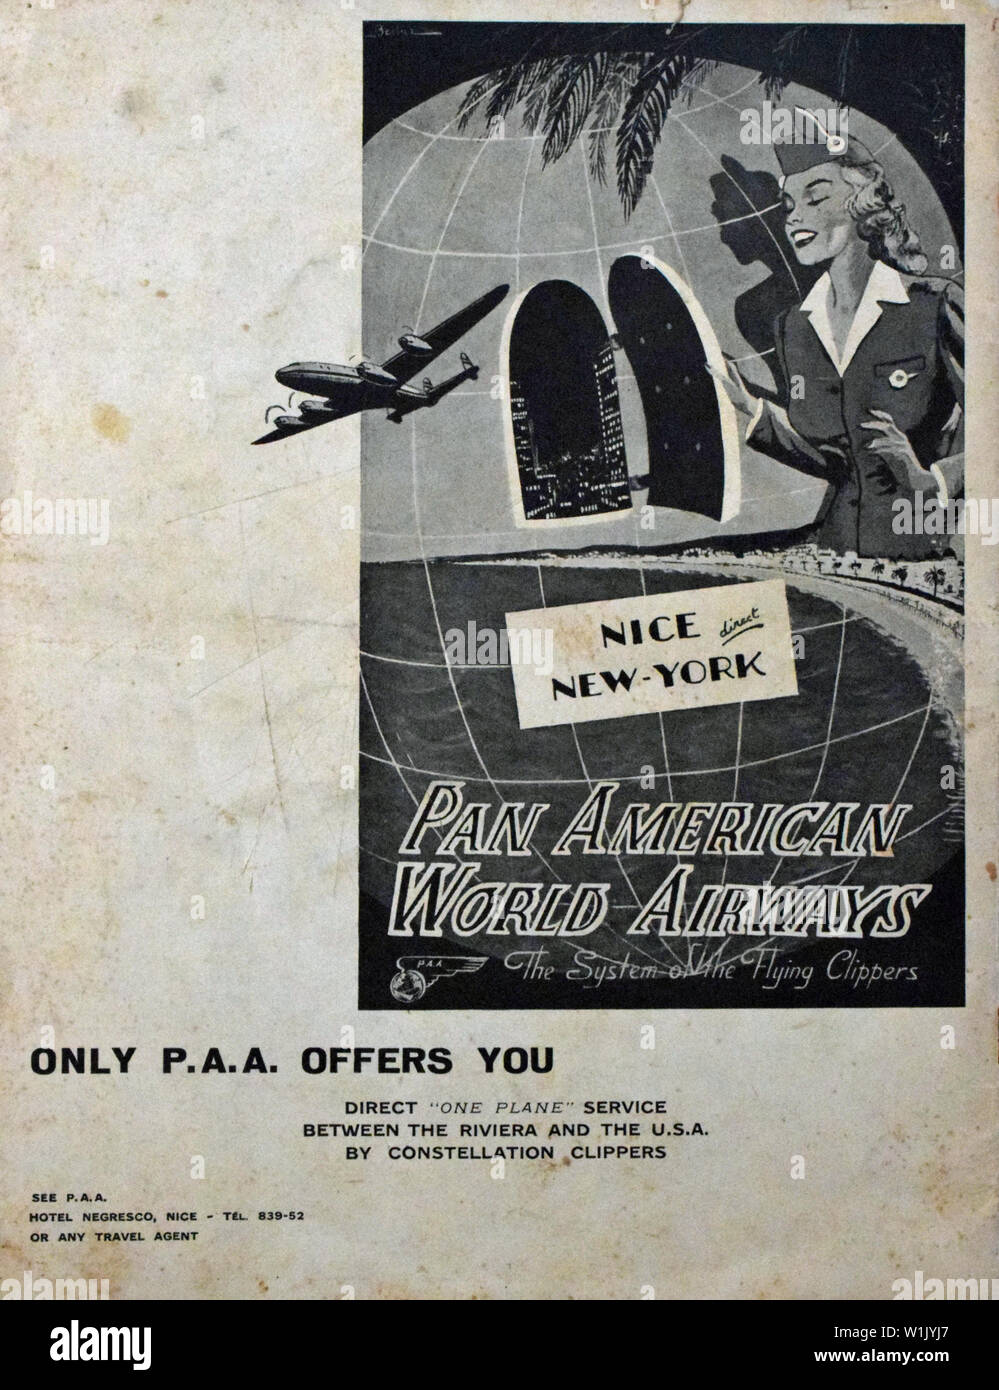 Pan American Anzeige 1951 Stockfoto